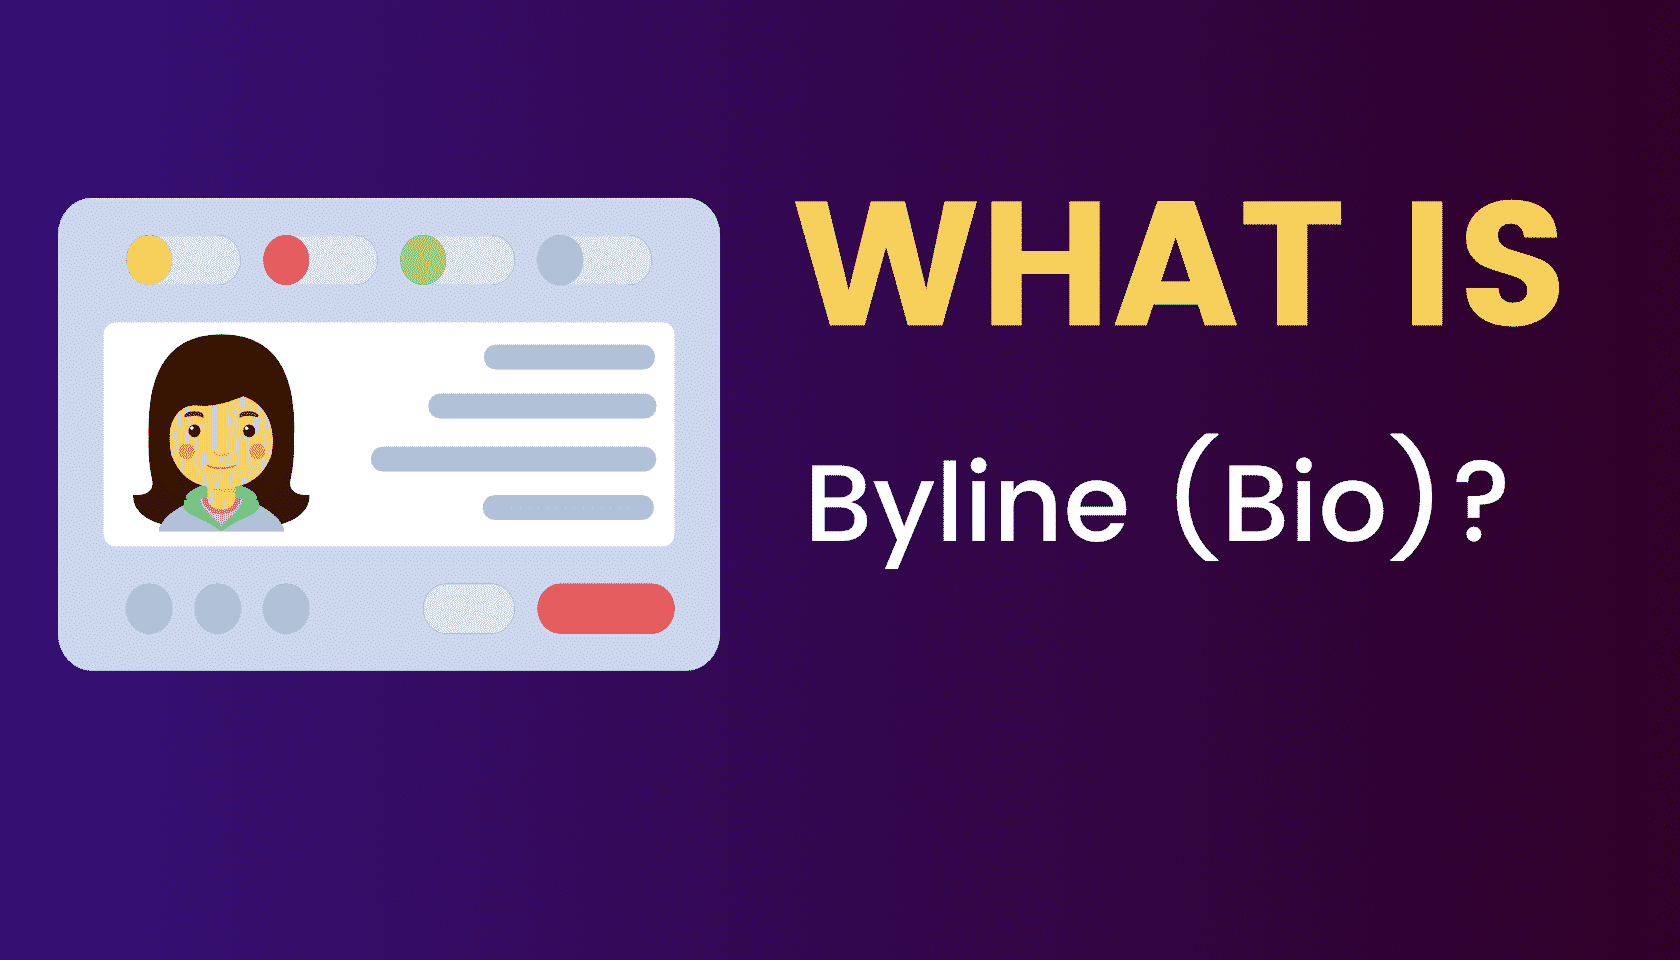 What is: Byline (Bio)?